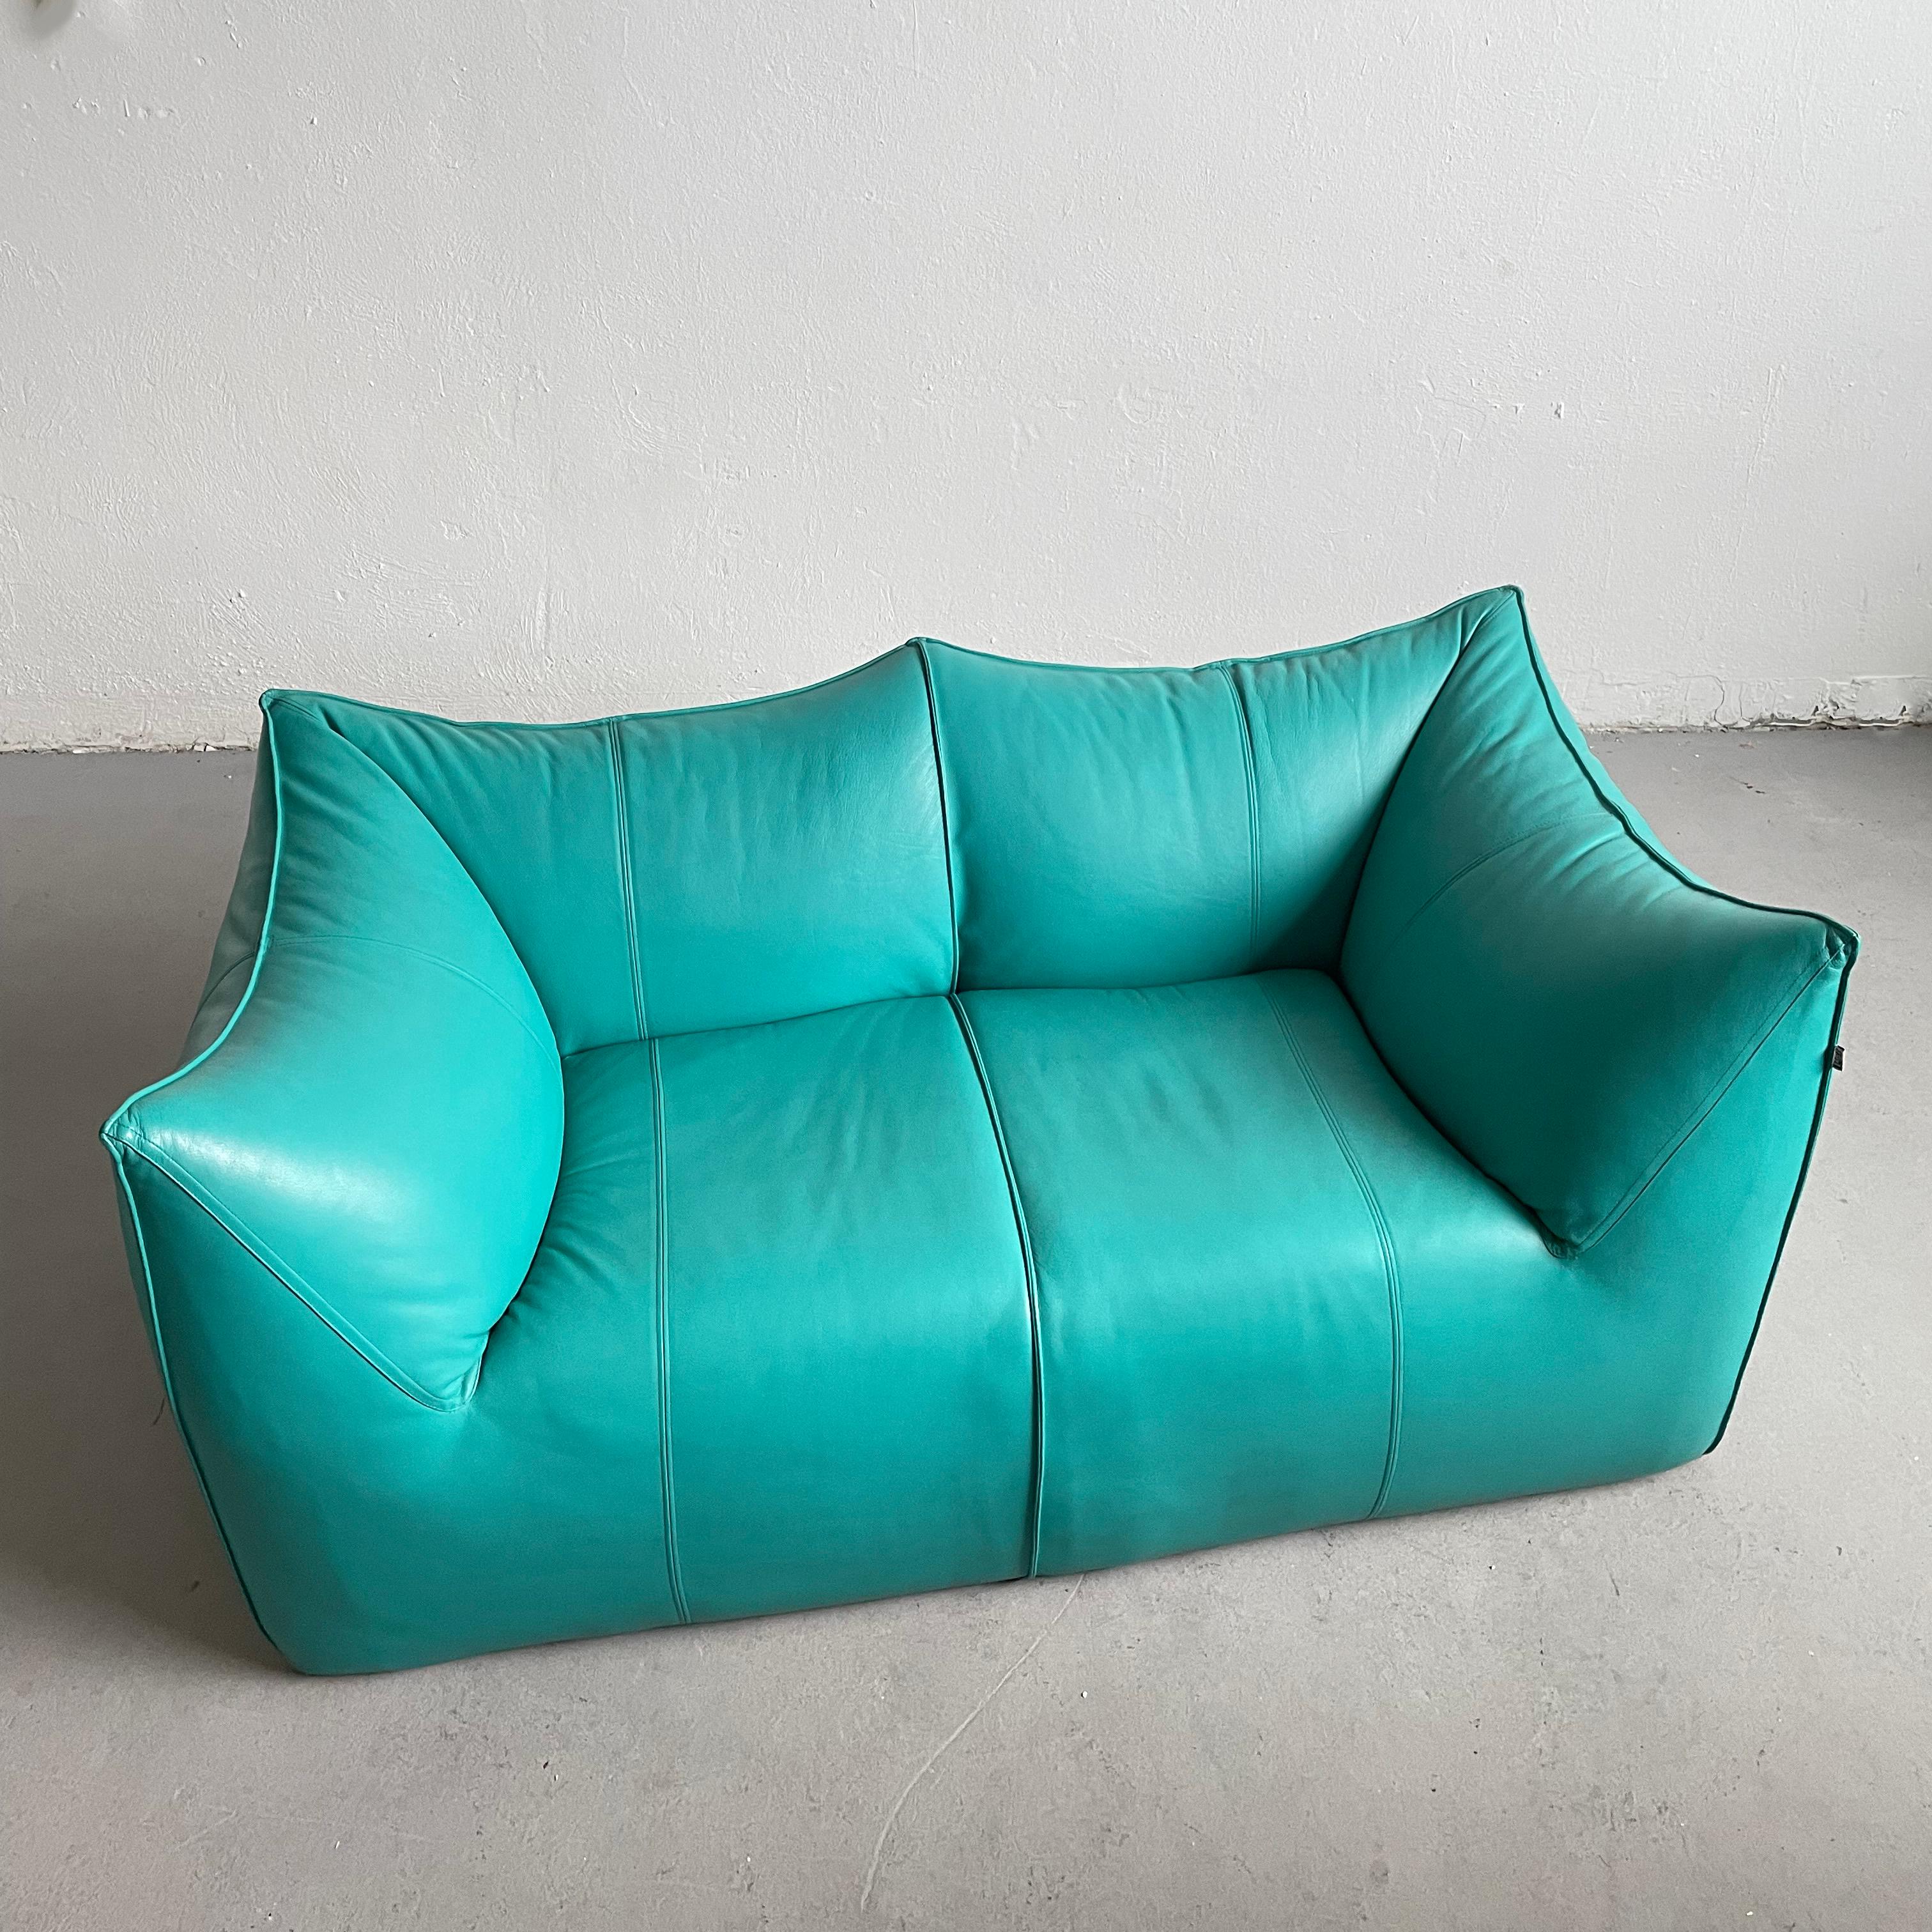 Post-Modern Le Bambole 2-Seater Sofa in Turquoise Leather, Mario Bellini for B&B Italia 70s For Sale